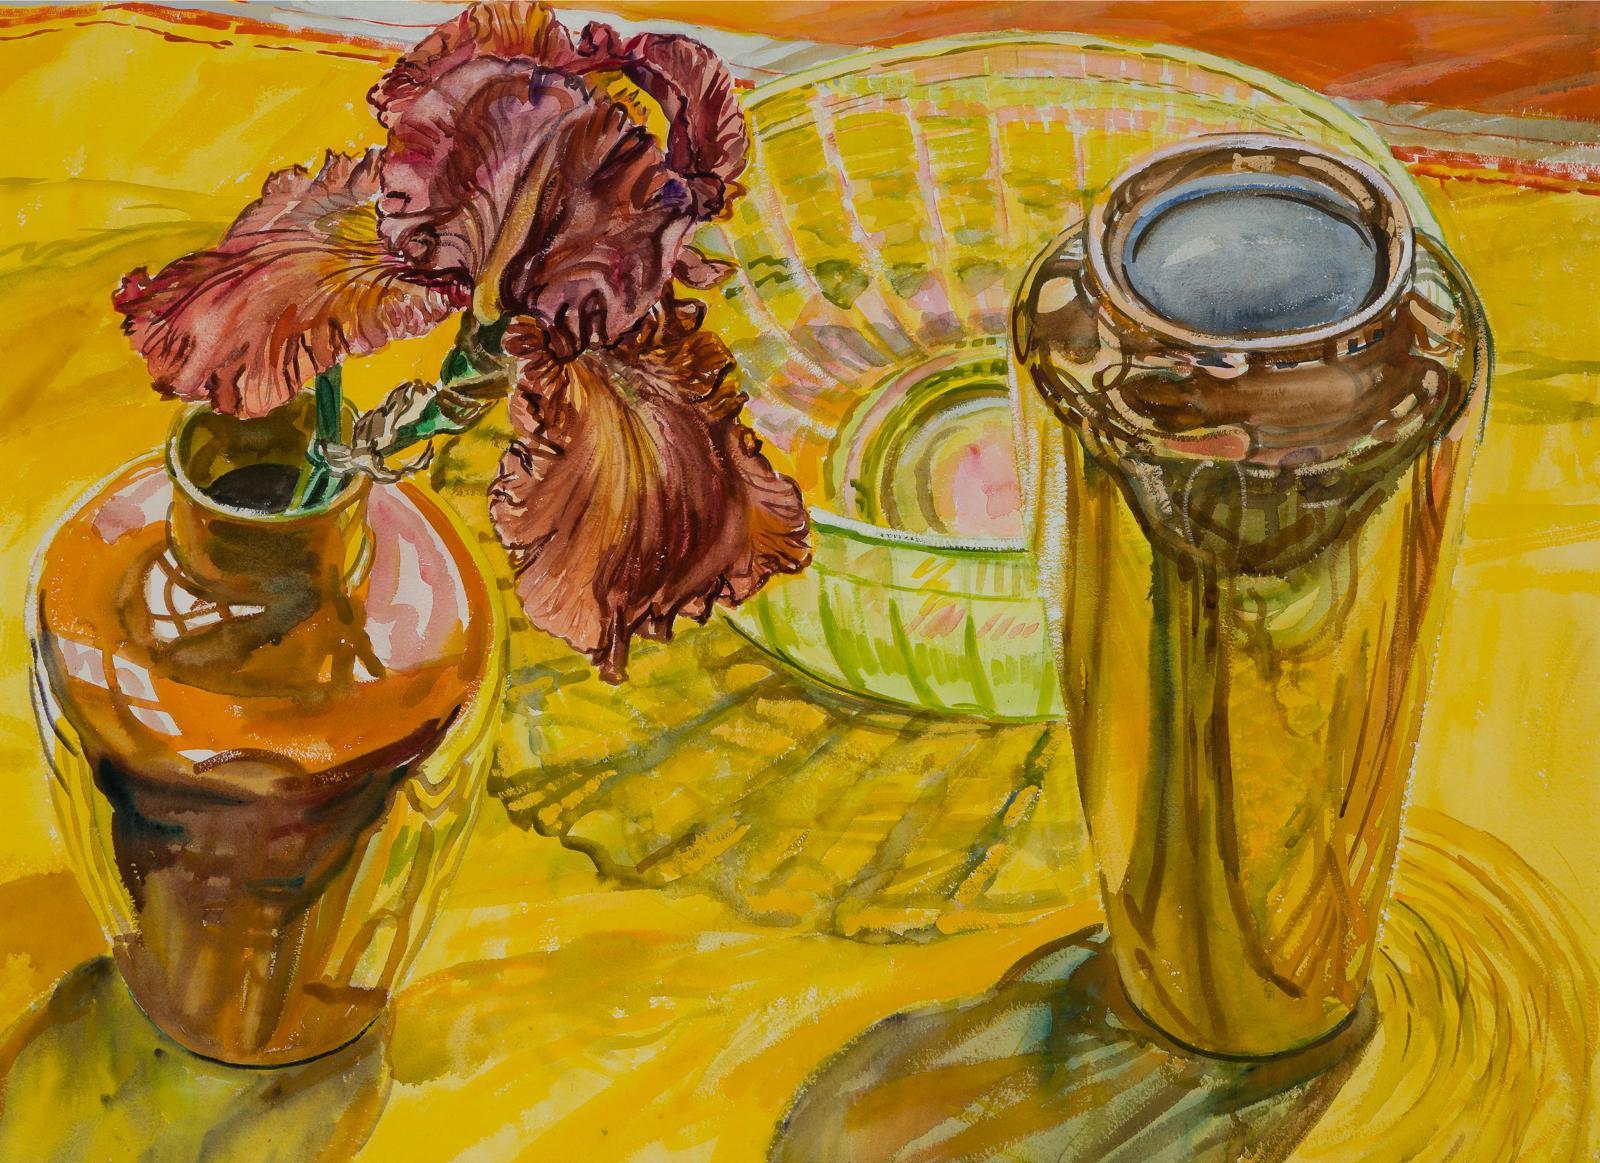 Janet Fish (1938) - Iris With Gold Vase, 1987